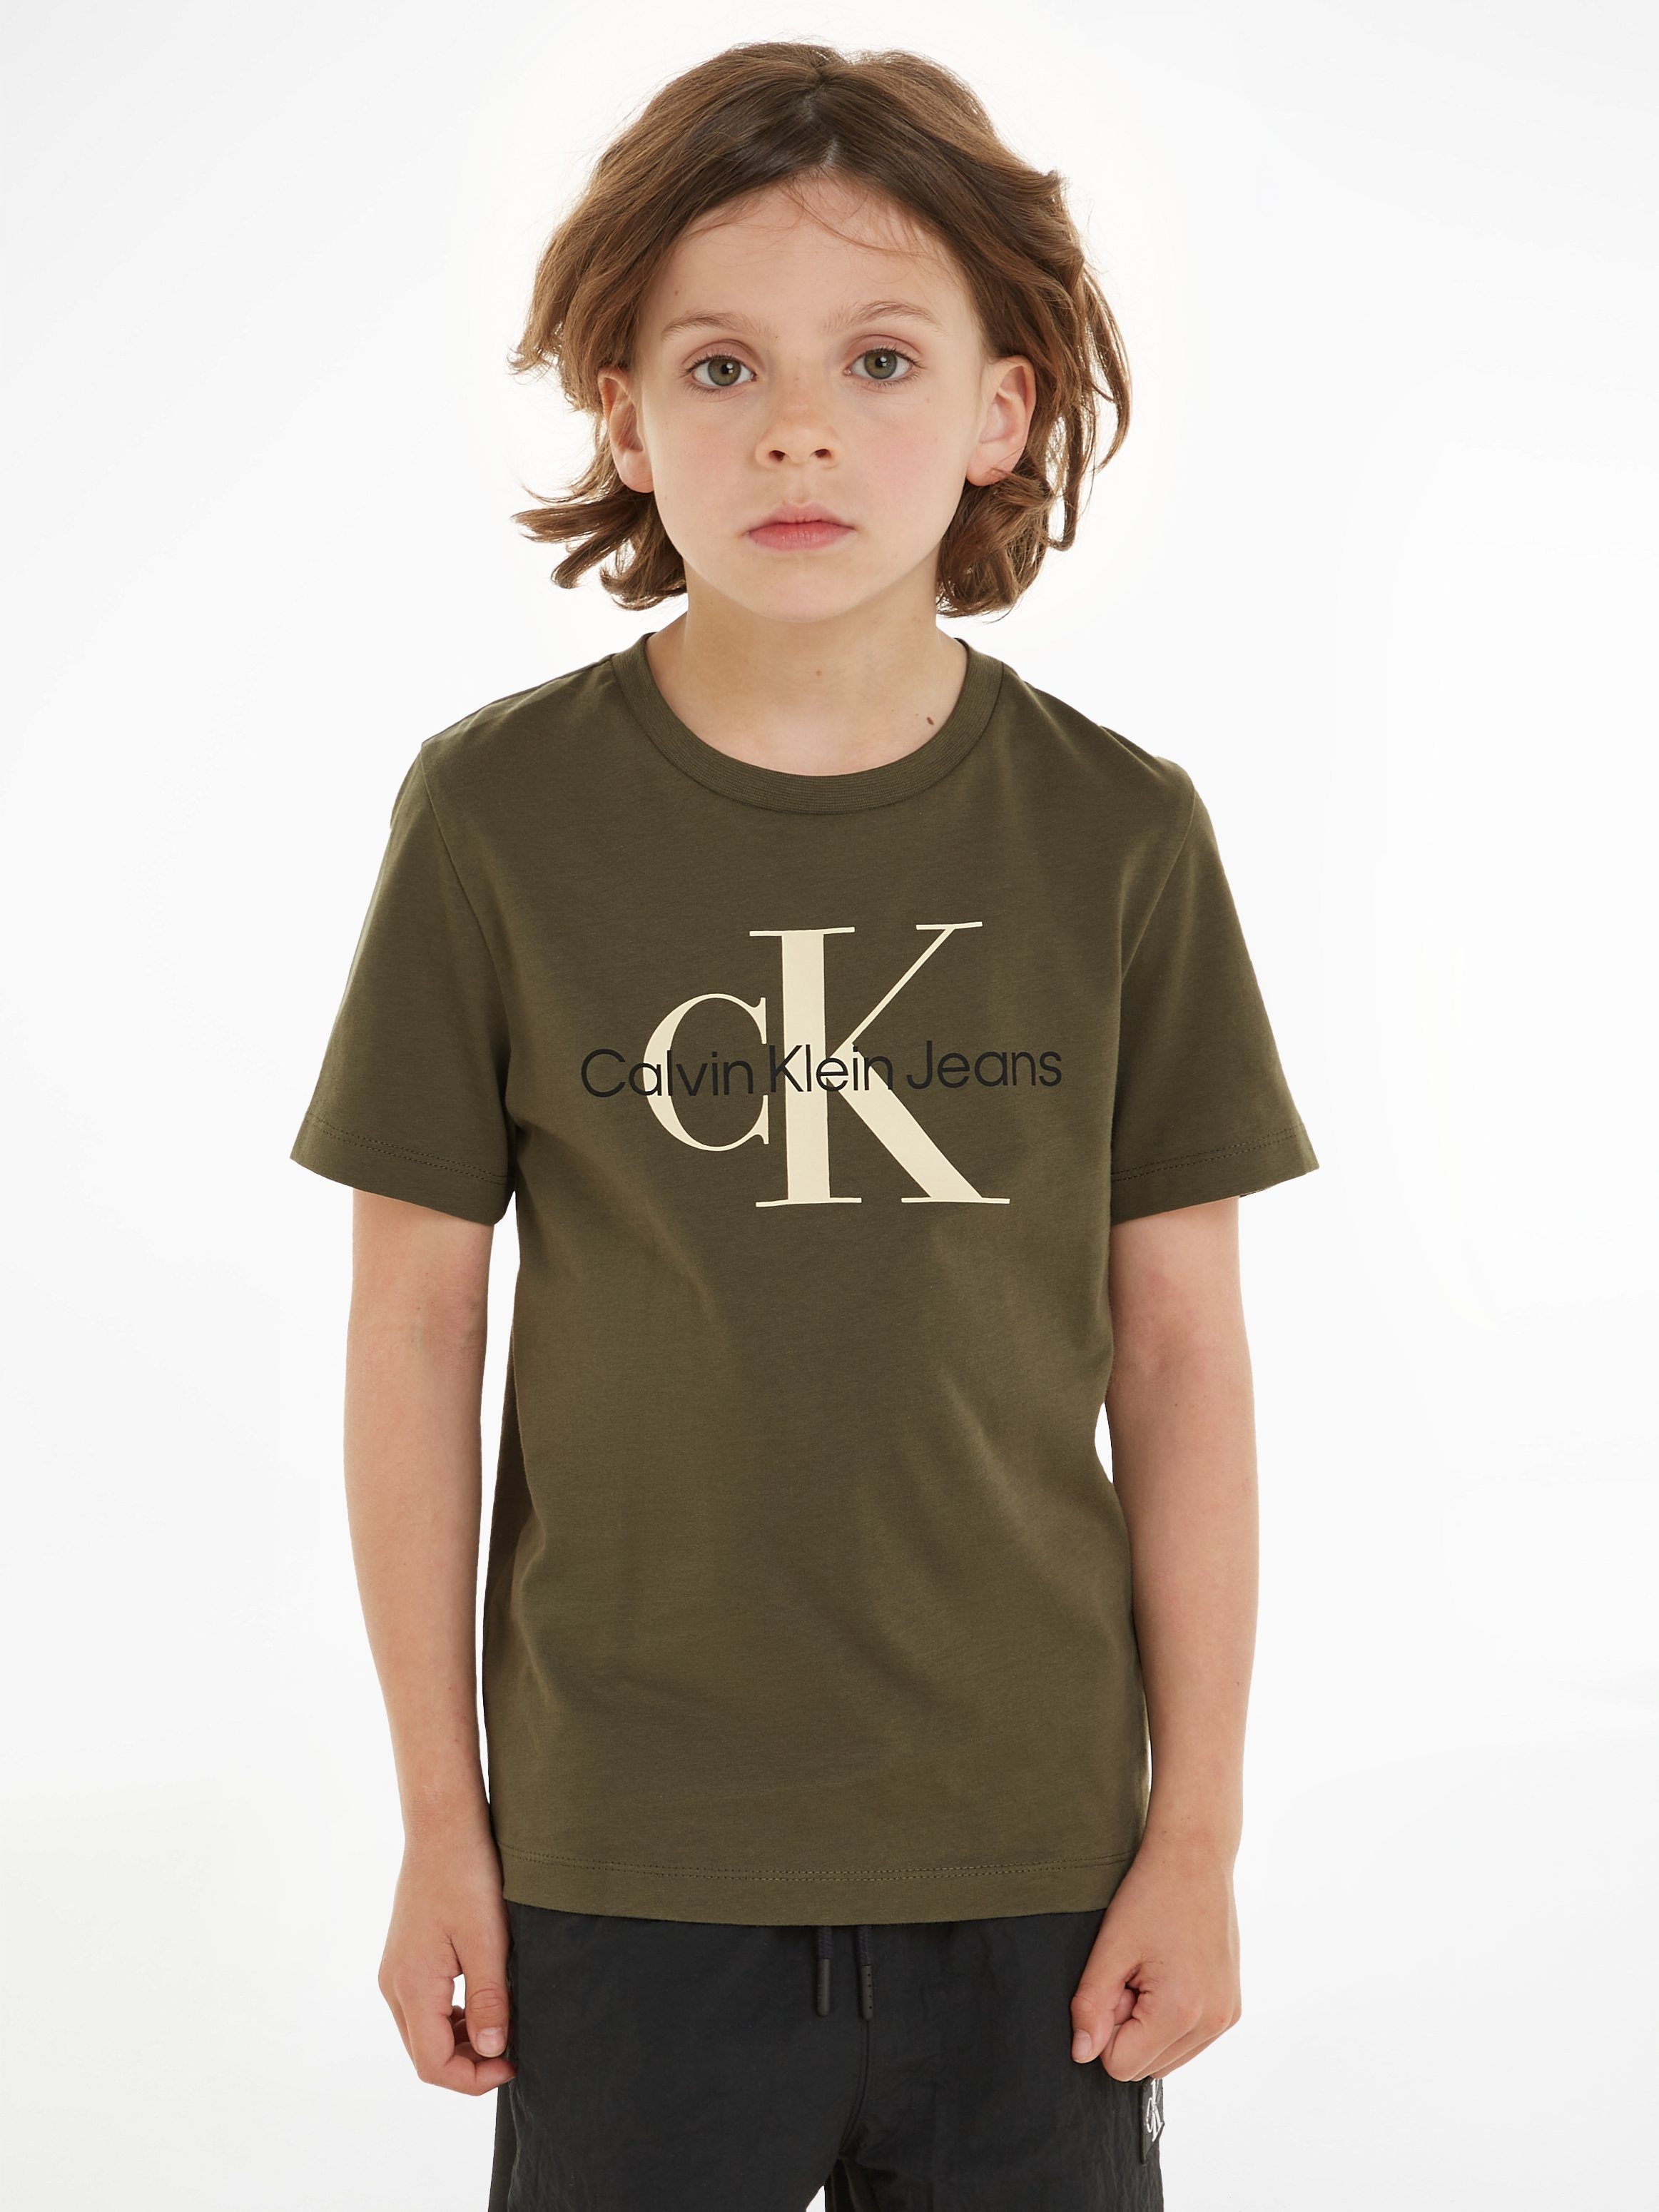 Calvin Klein Jeans CK T-Shirt Dusty SS T-SHIRT Olive MONOGRAM